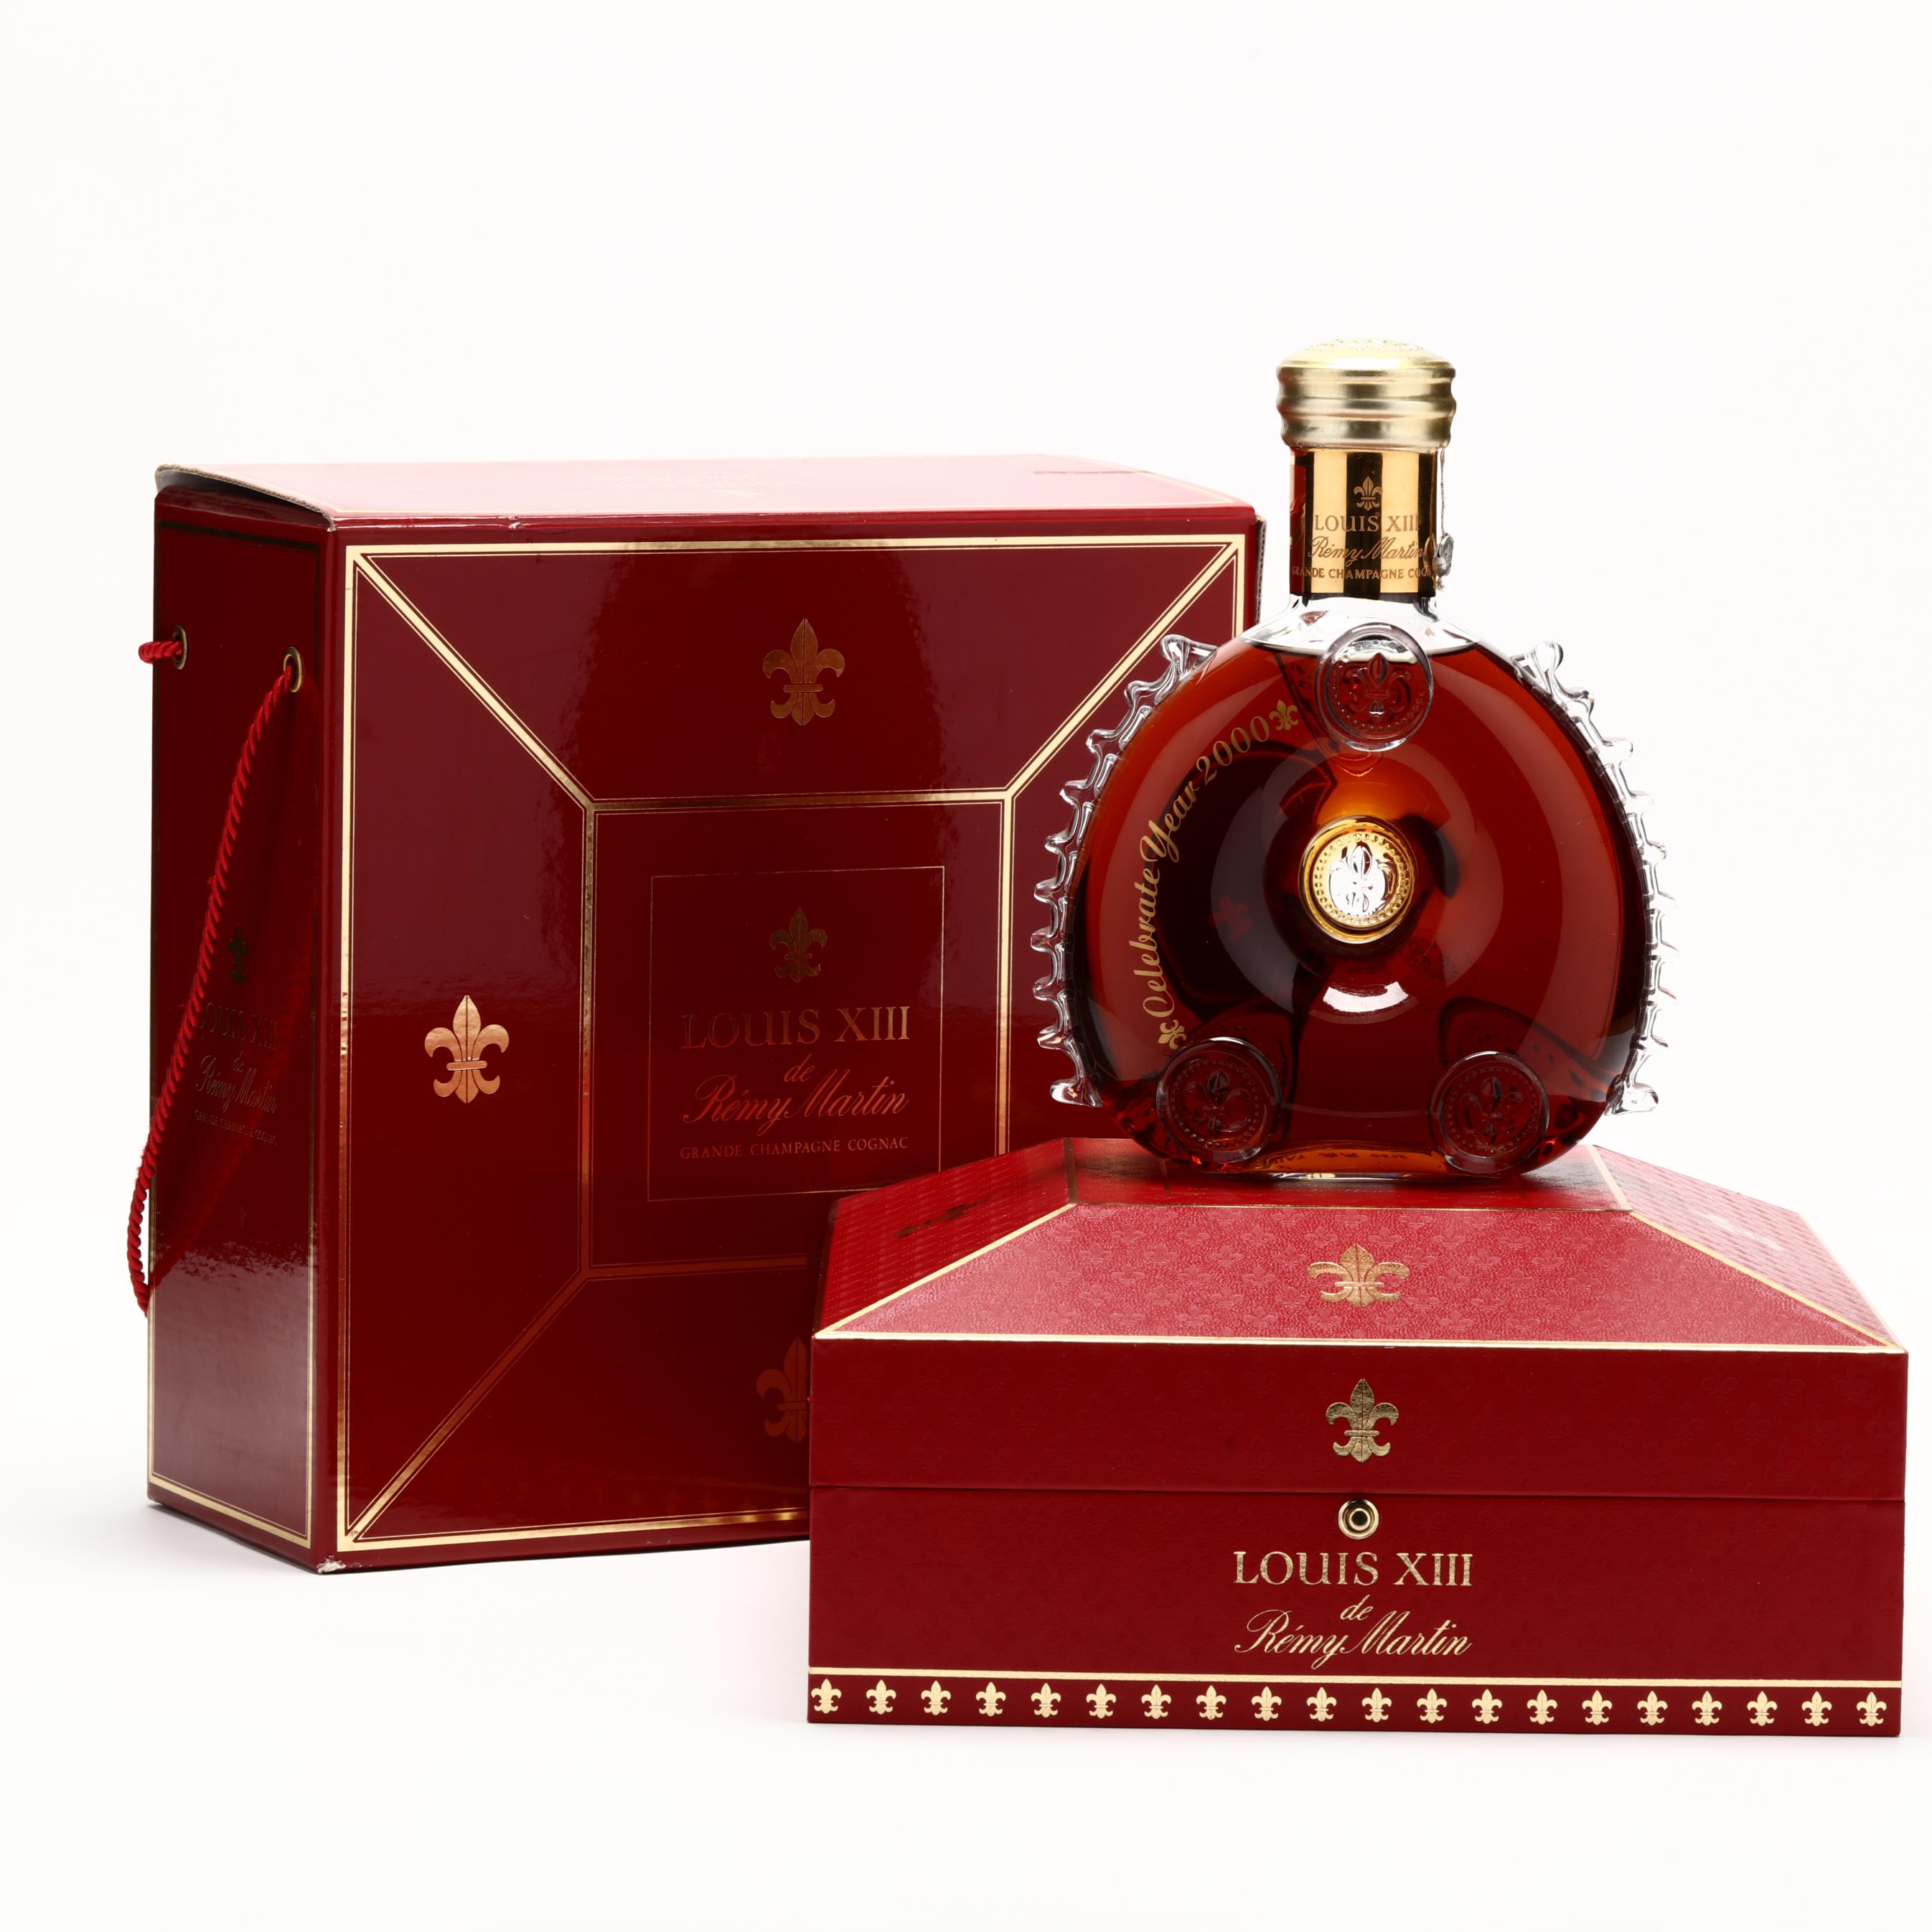 Buy Louis XIII Cognac 1990s Original Box Set